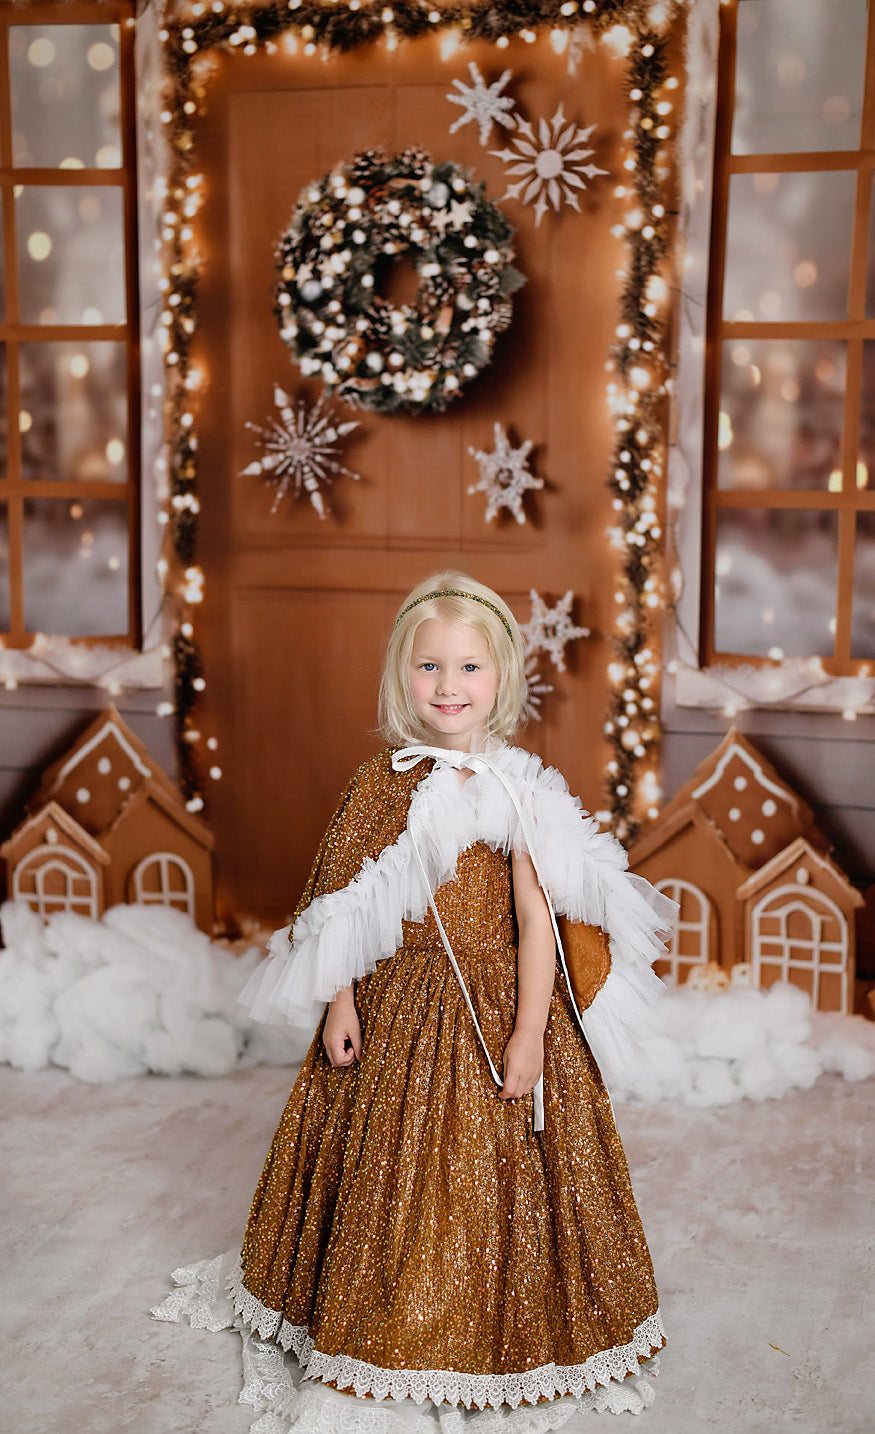 Christmas themed dress, gingerbread dress, children's rental dresses, dresses for photography sessions